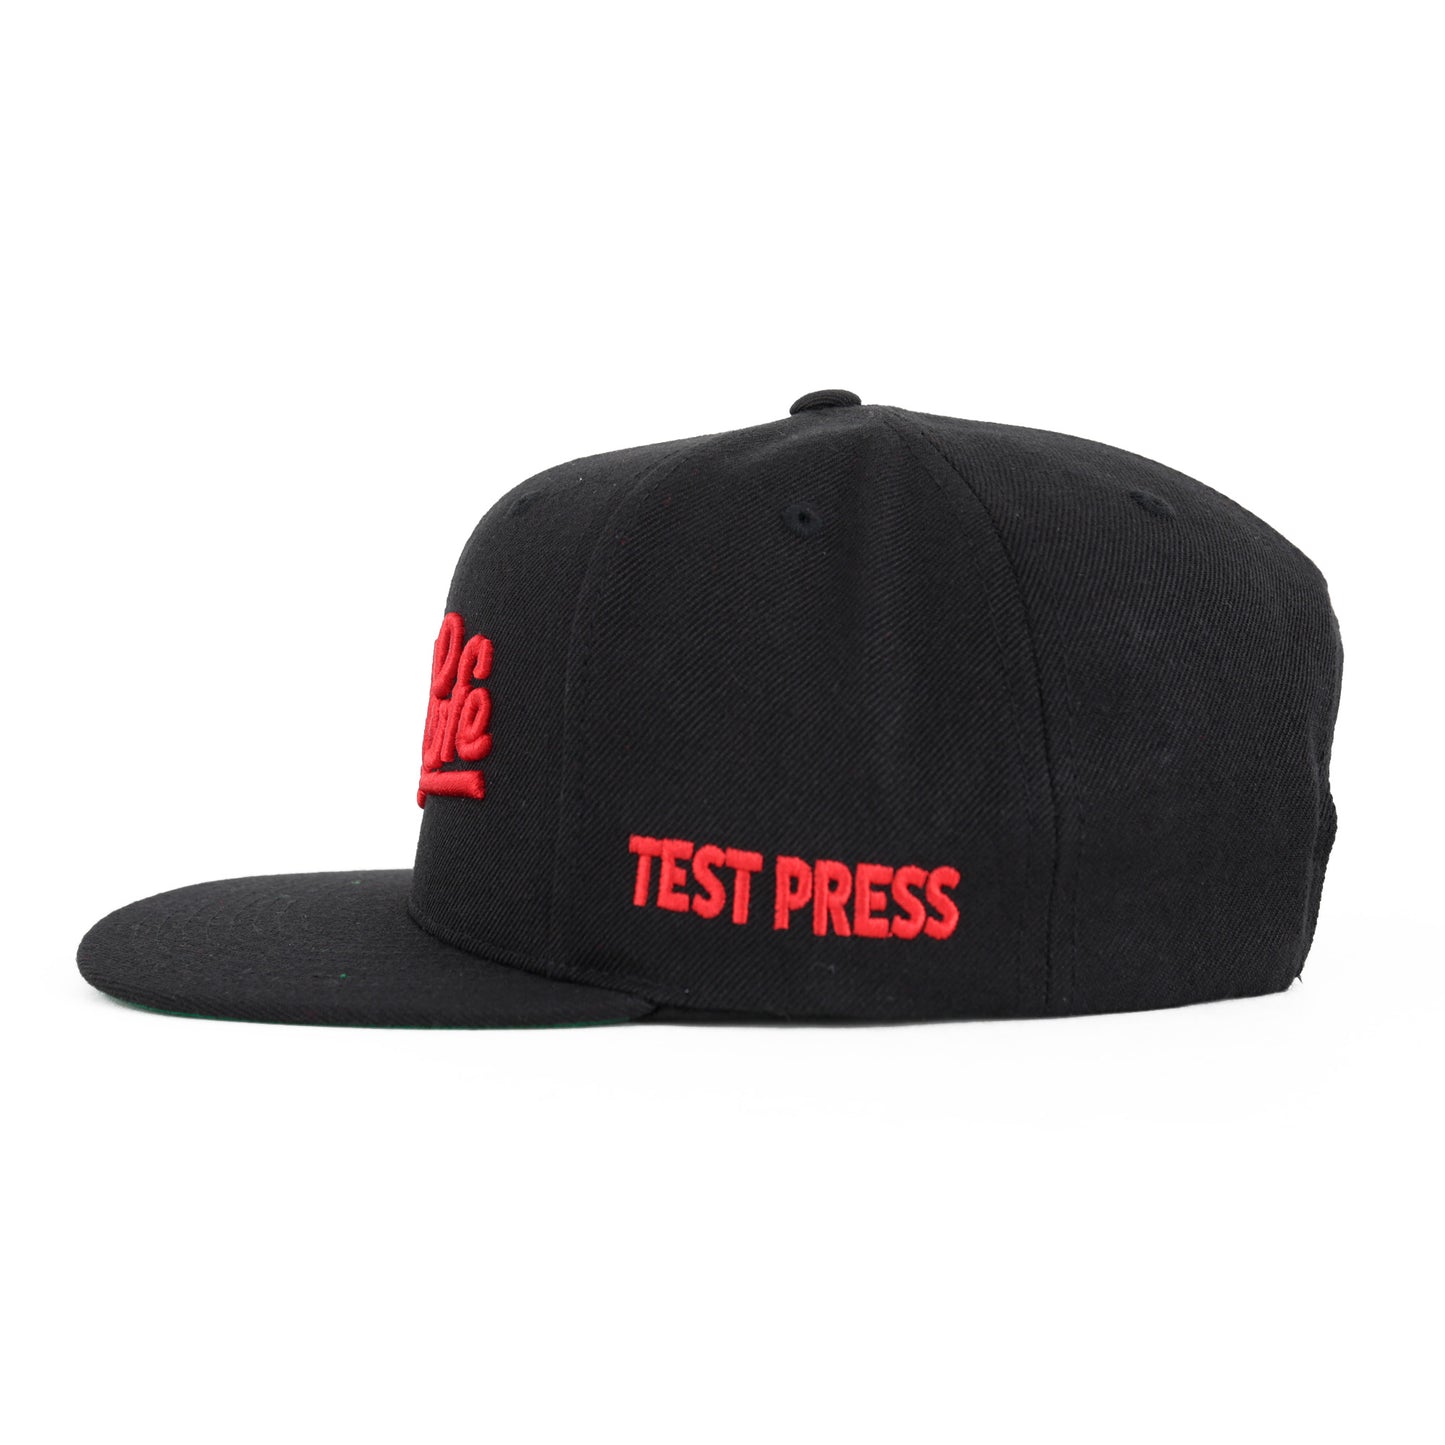 WORDLYFE SNAPBACK LIMITED EDITION "TEST PRESS" (BLACK/RED)